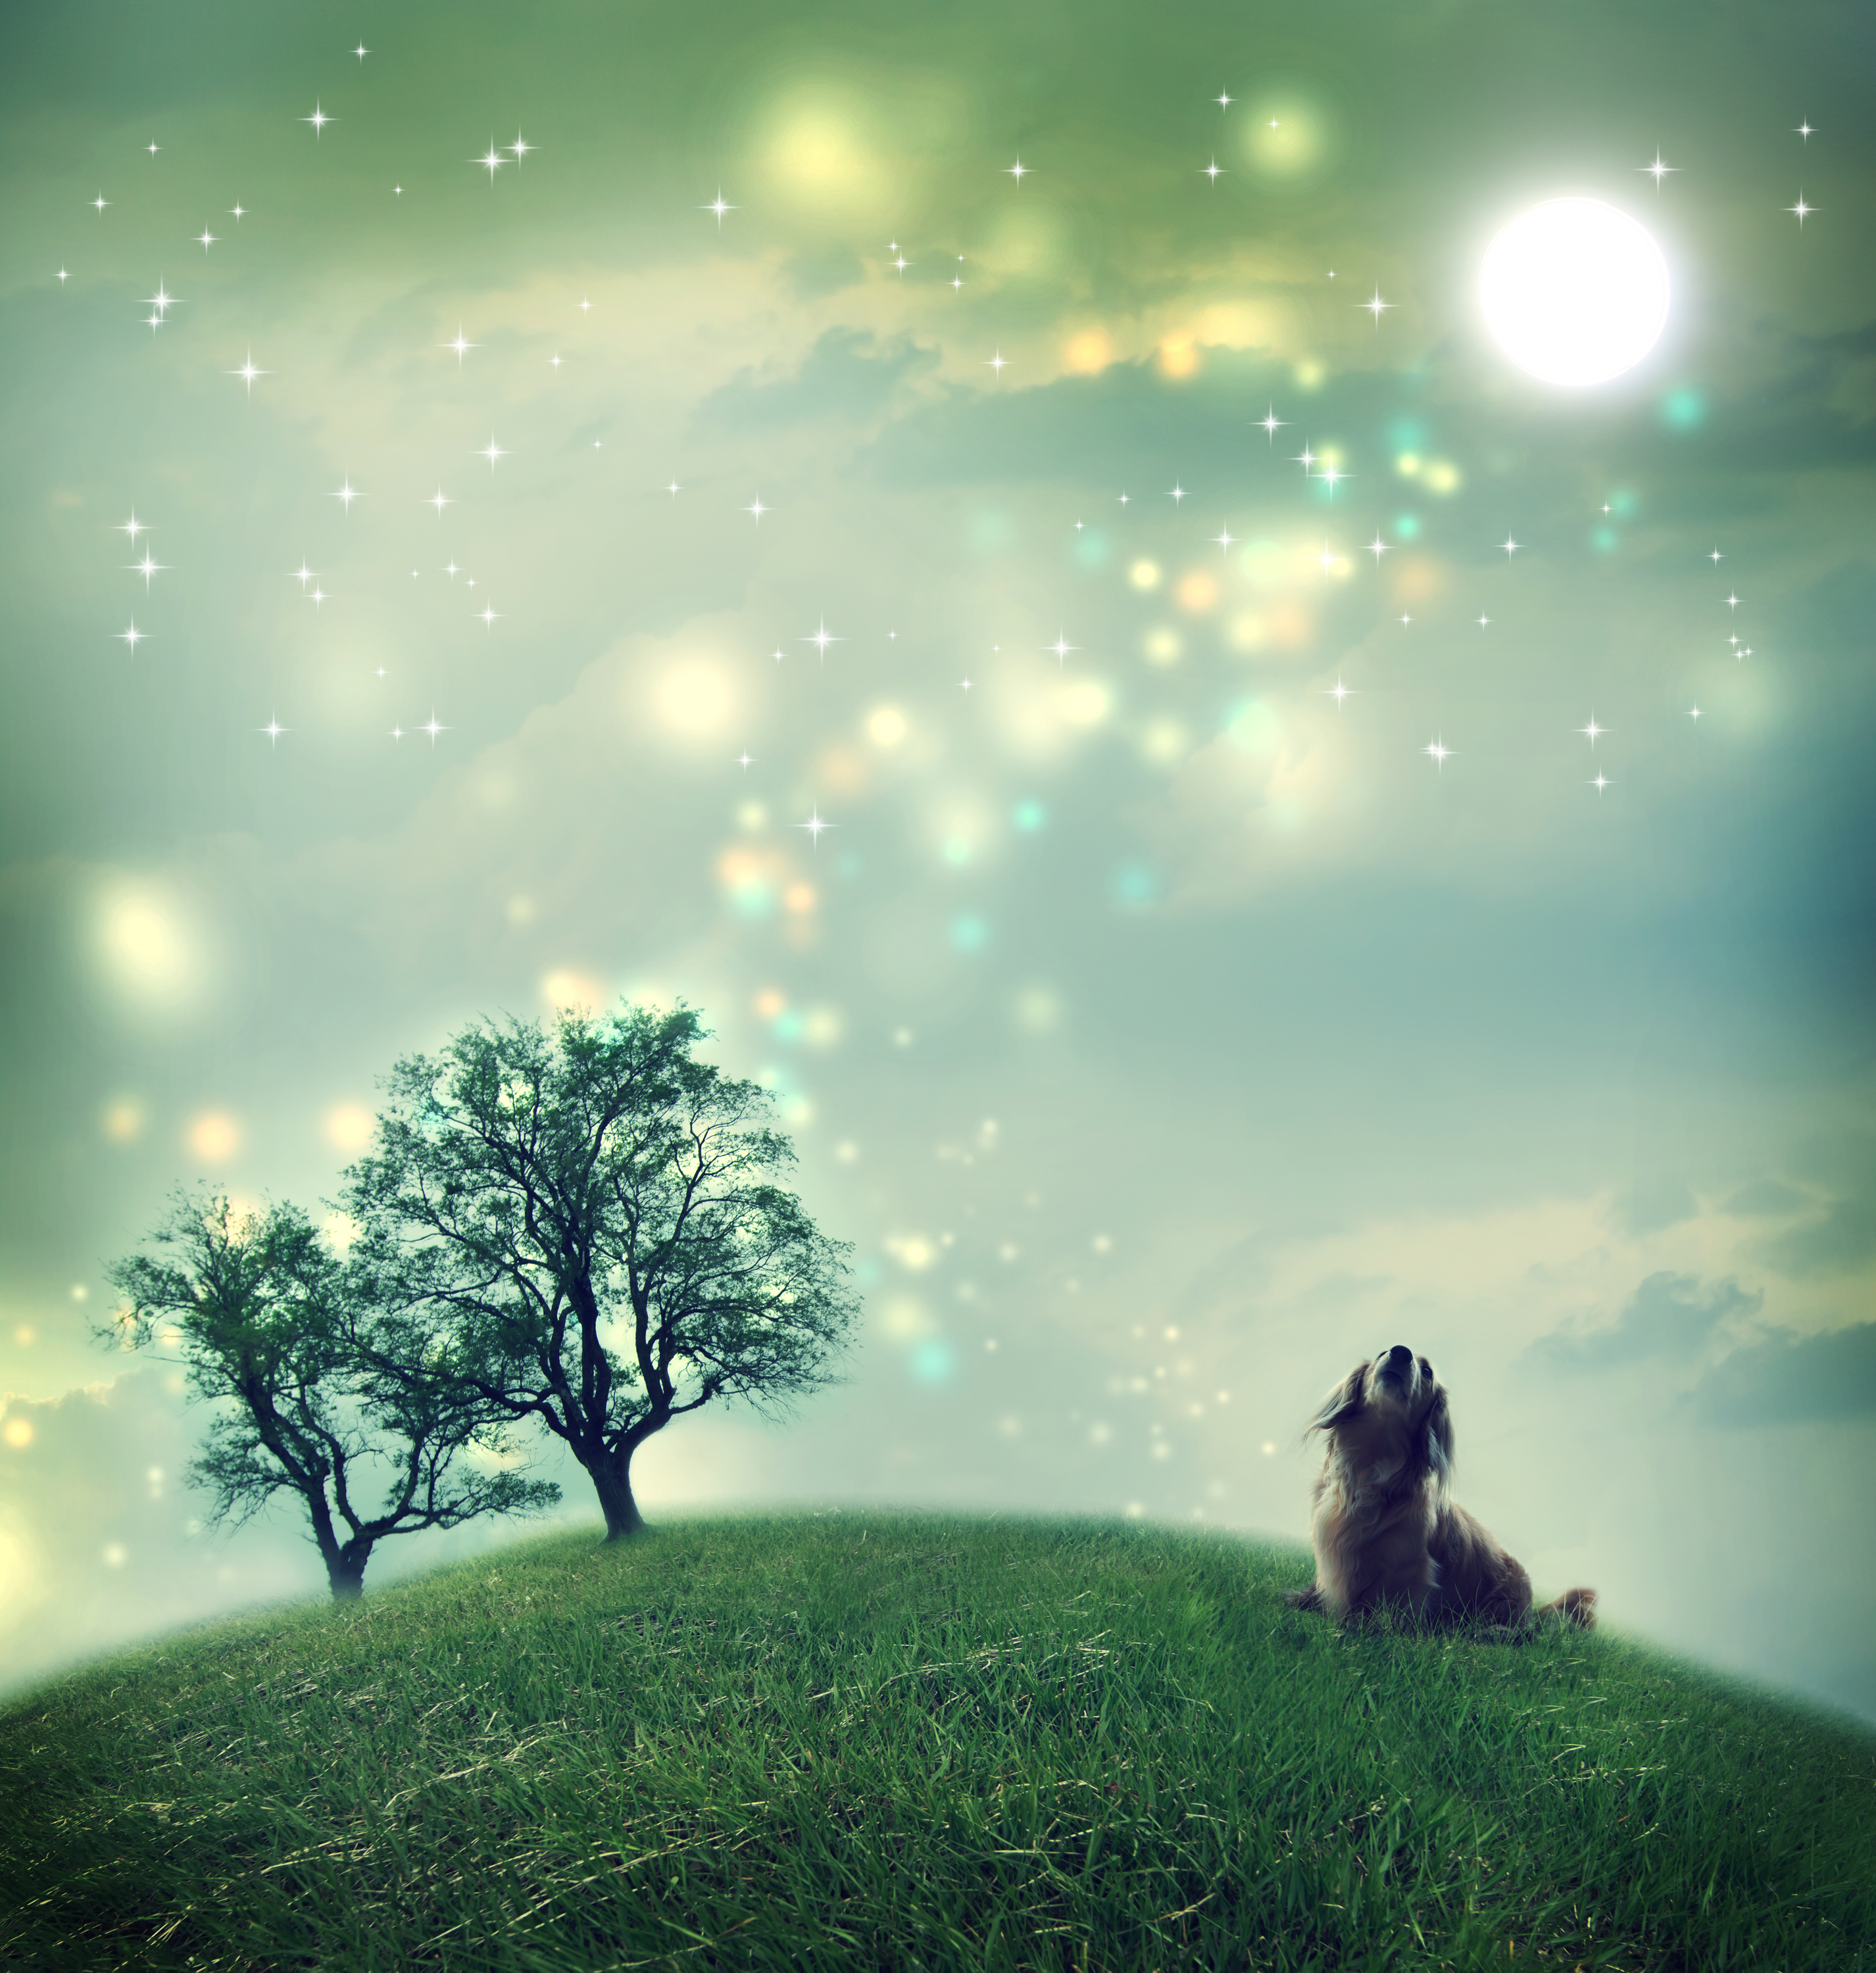 Dachshund dog in a magical landscape